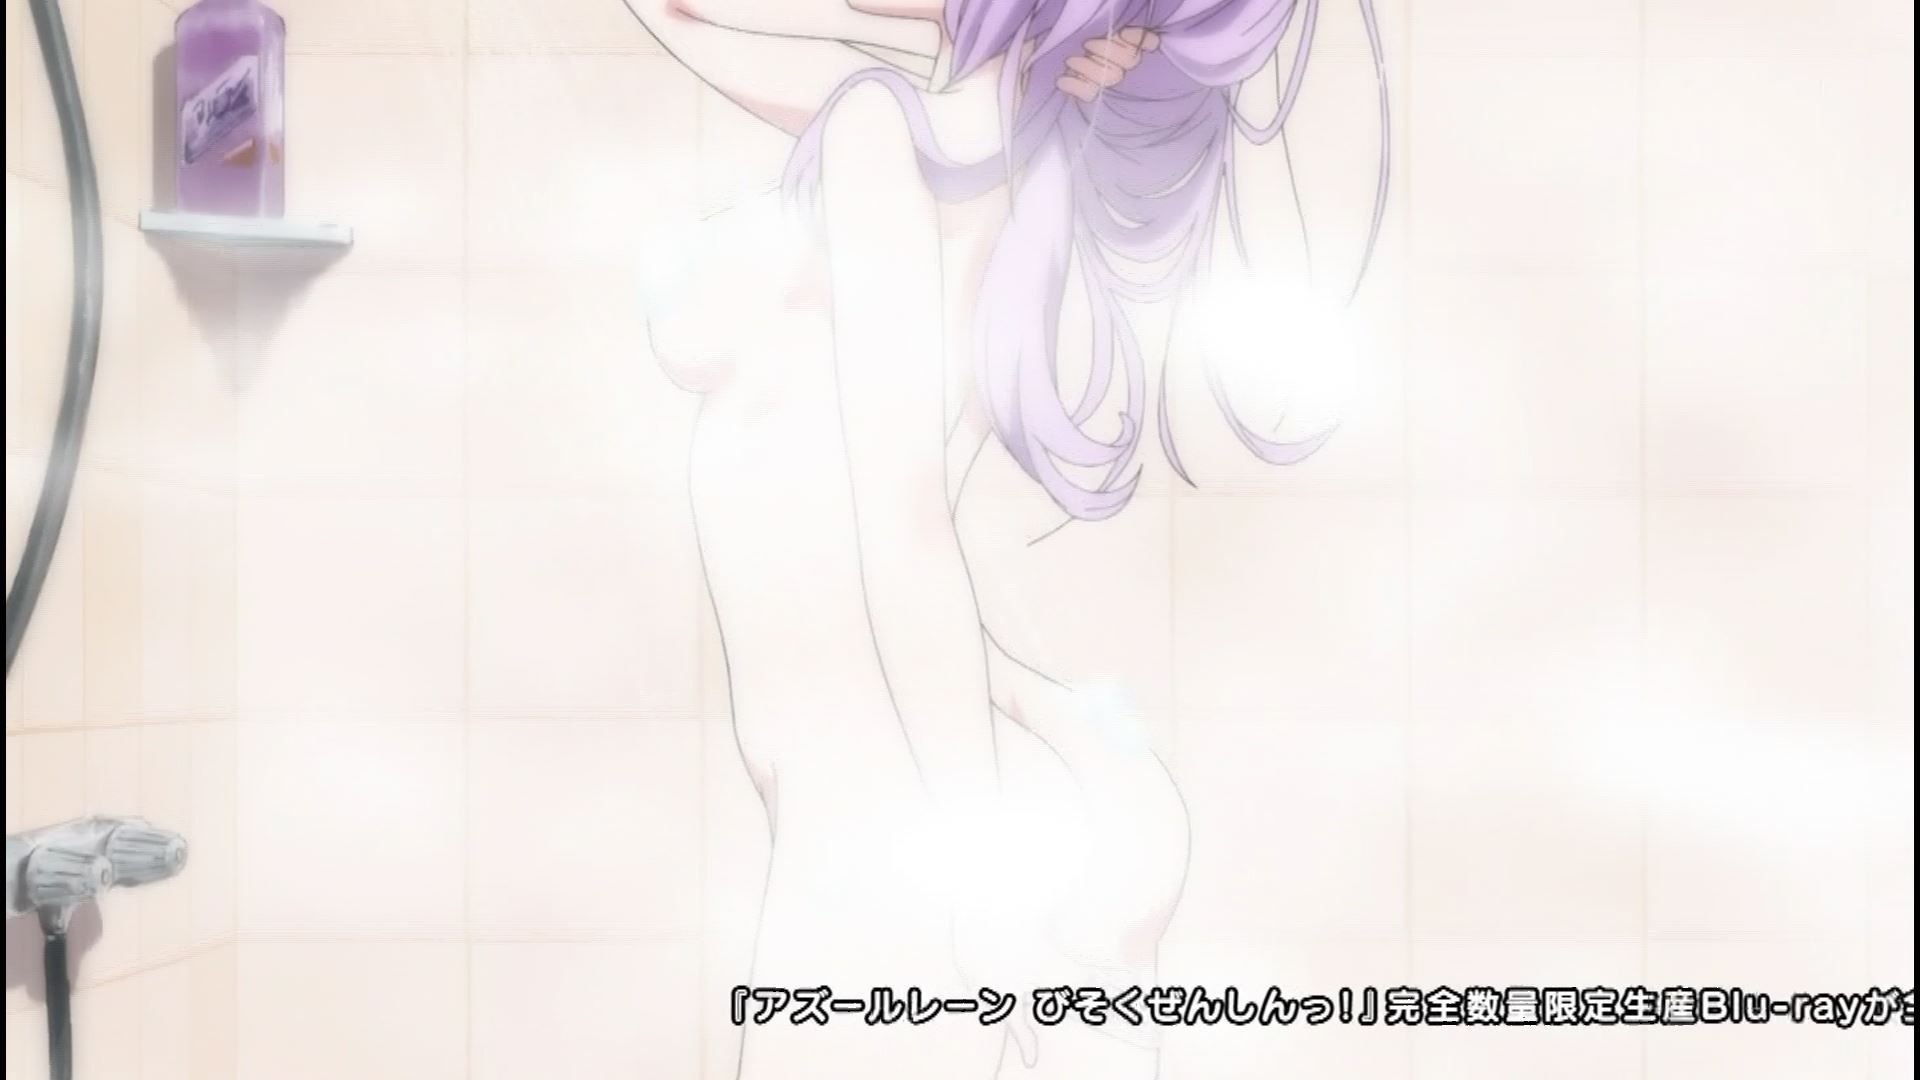 Anime "Azur Lane, 2010! Erotic shower scenes of girls in one story! 6